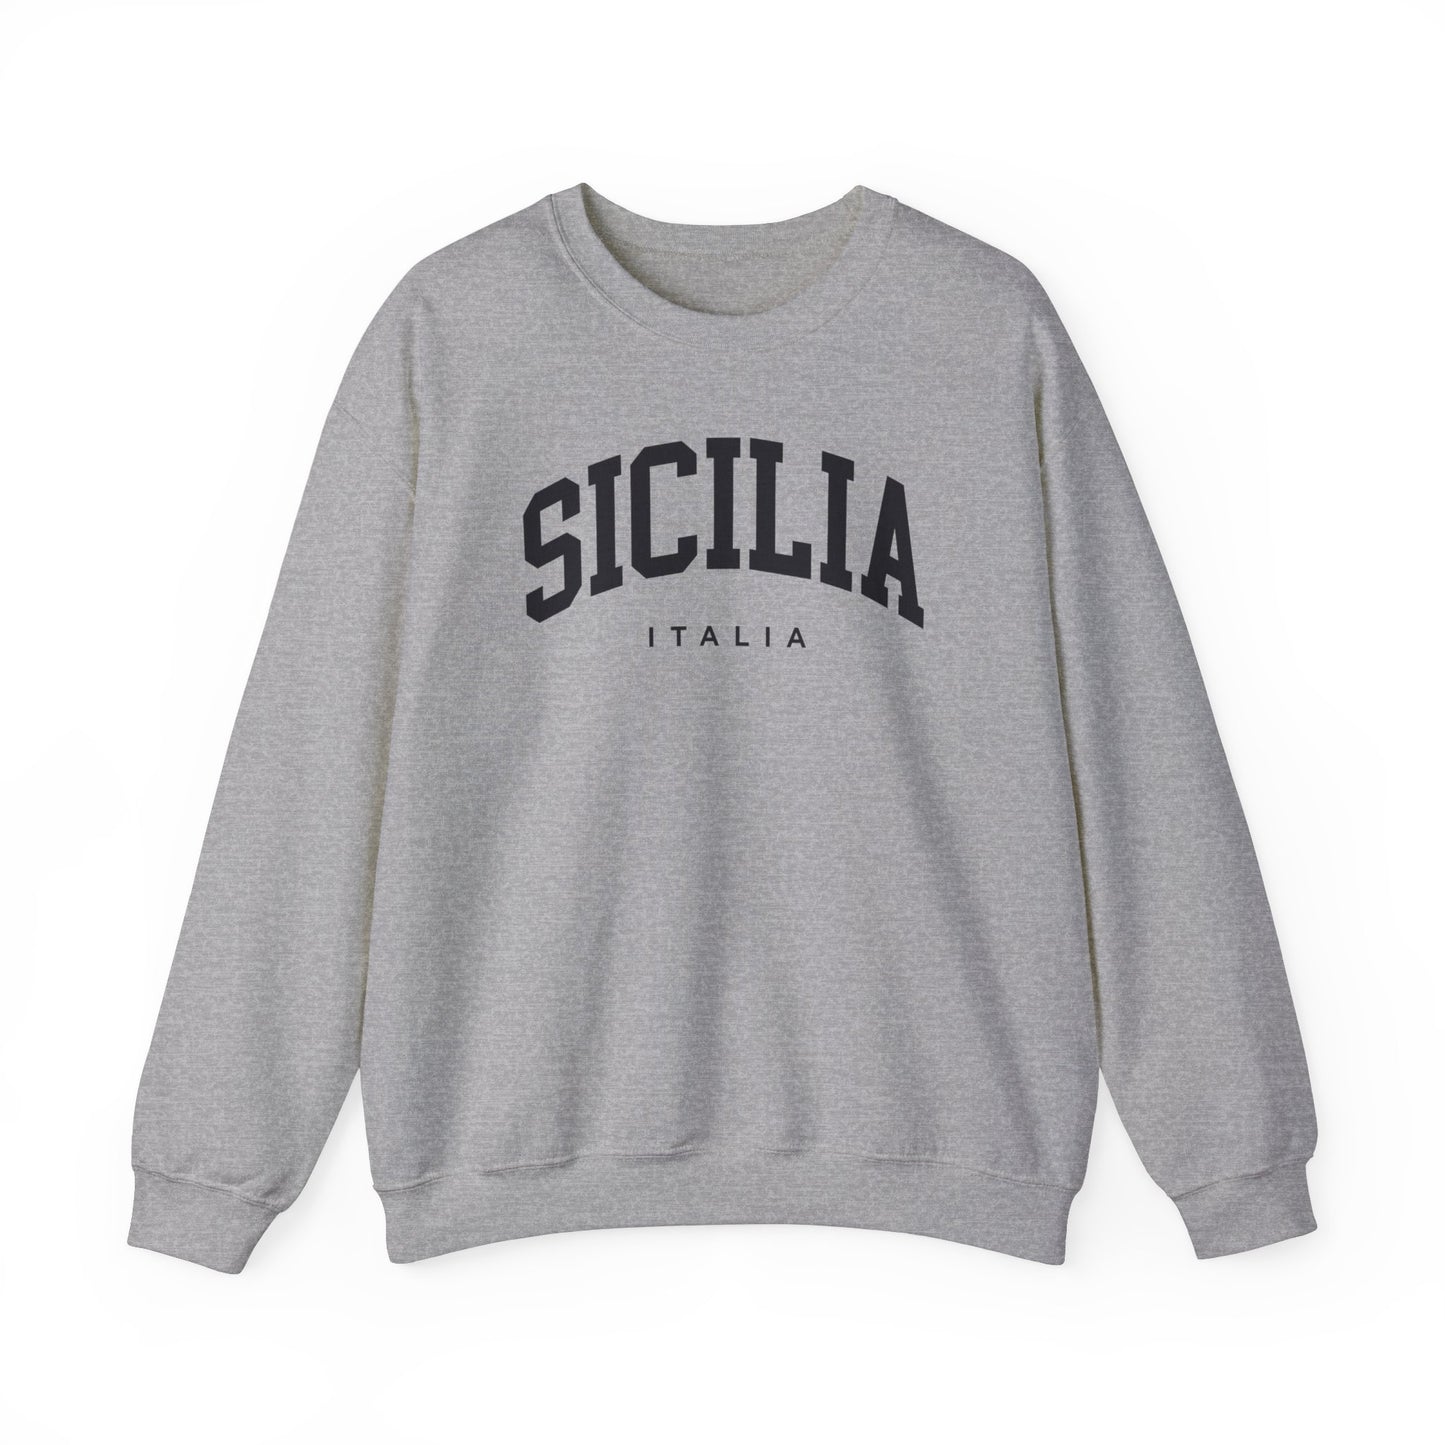 Sicily Italy Sweatshirt